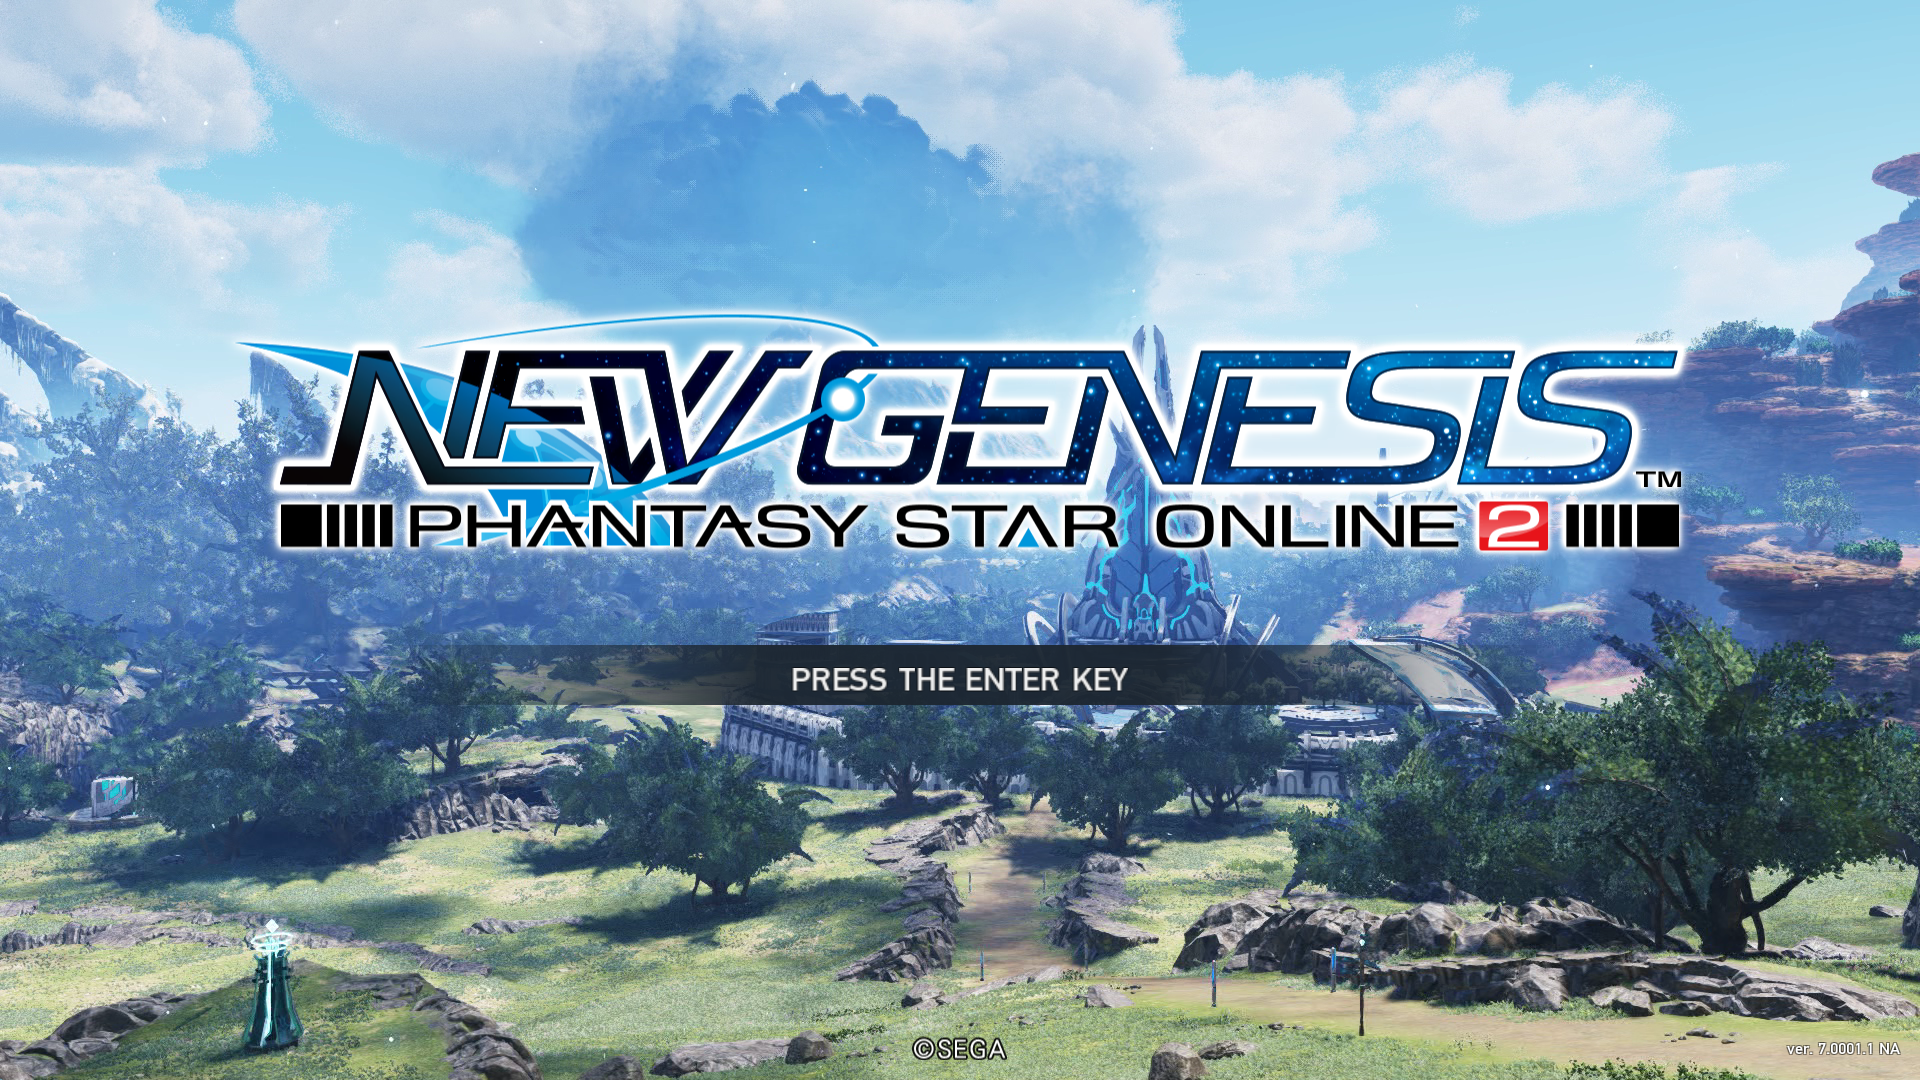 Phantasy Star Online 2 New Genesis